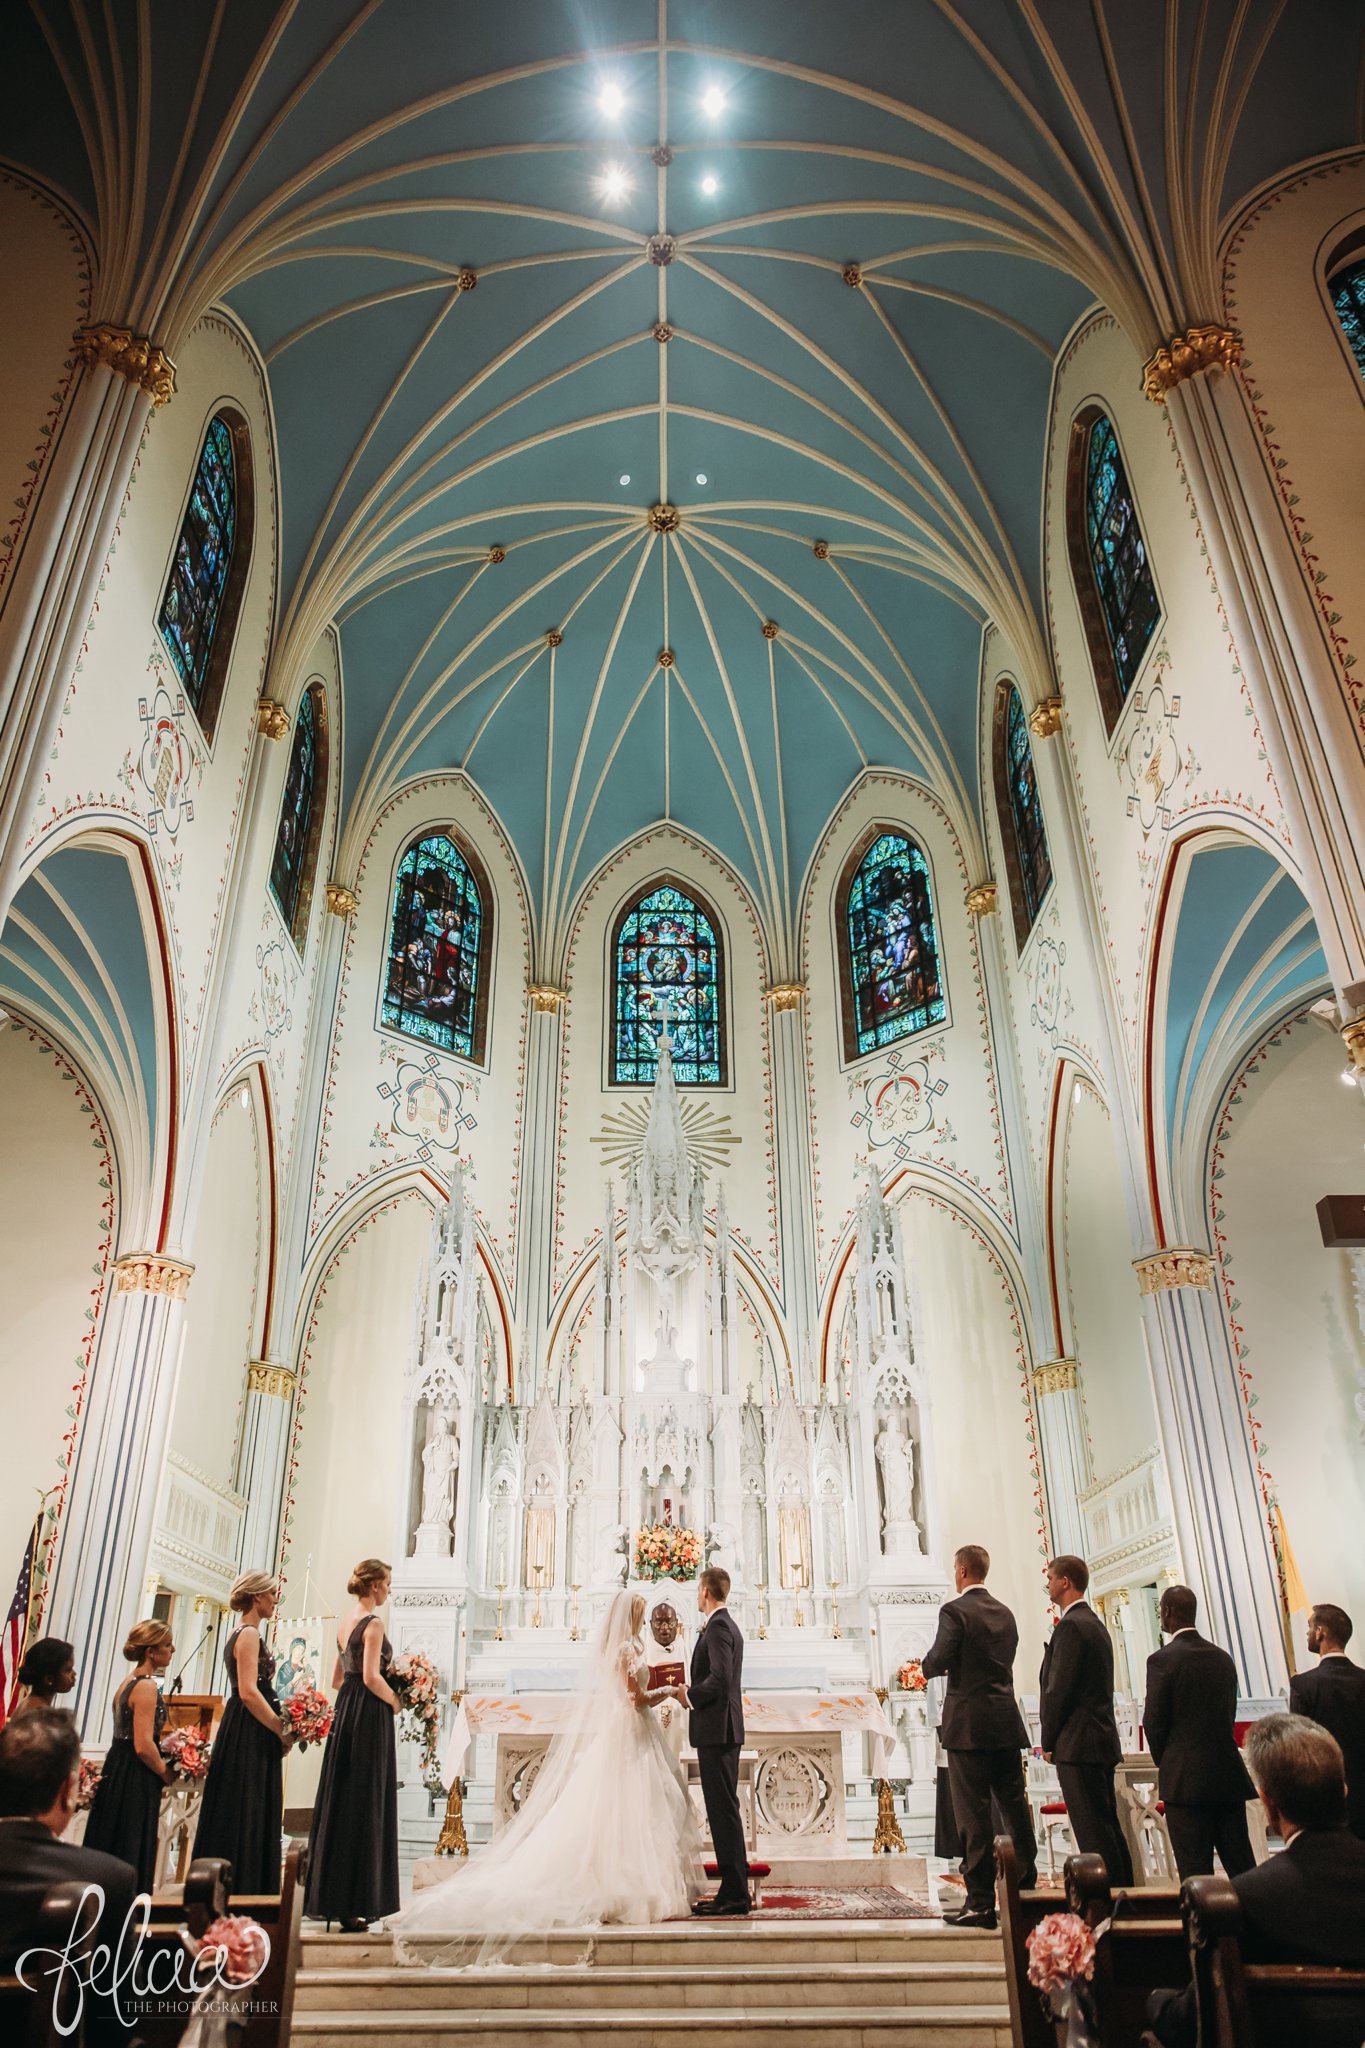 images by feliciathephotographer.com | wedding photographer | kansas city | redemptorist | classic | symmetrical | ceremony | bridal party | catholic | our lady of perpetual help | romantic | glamorous |